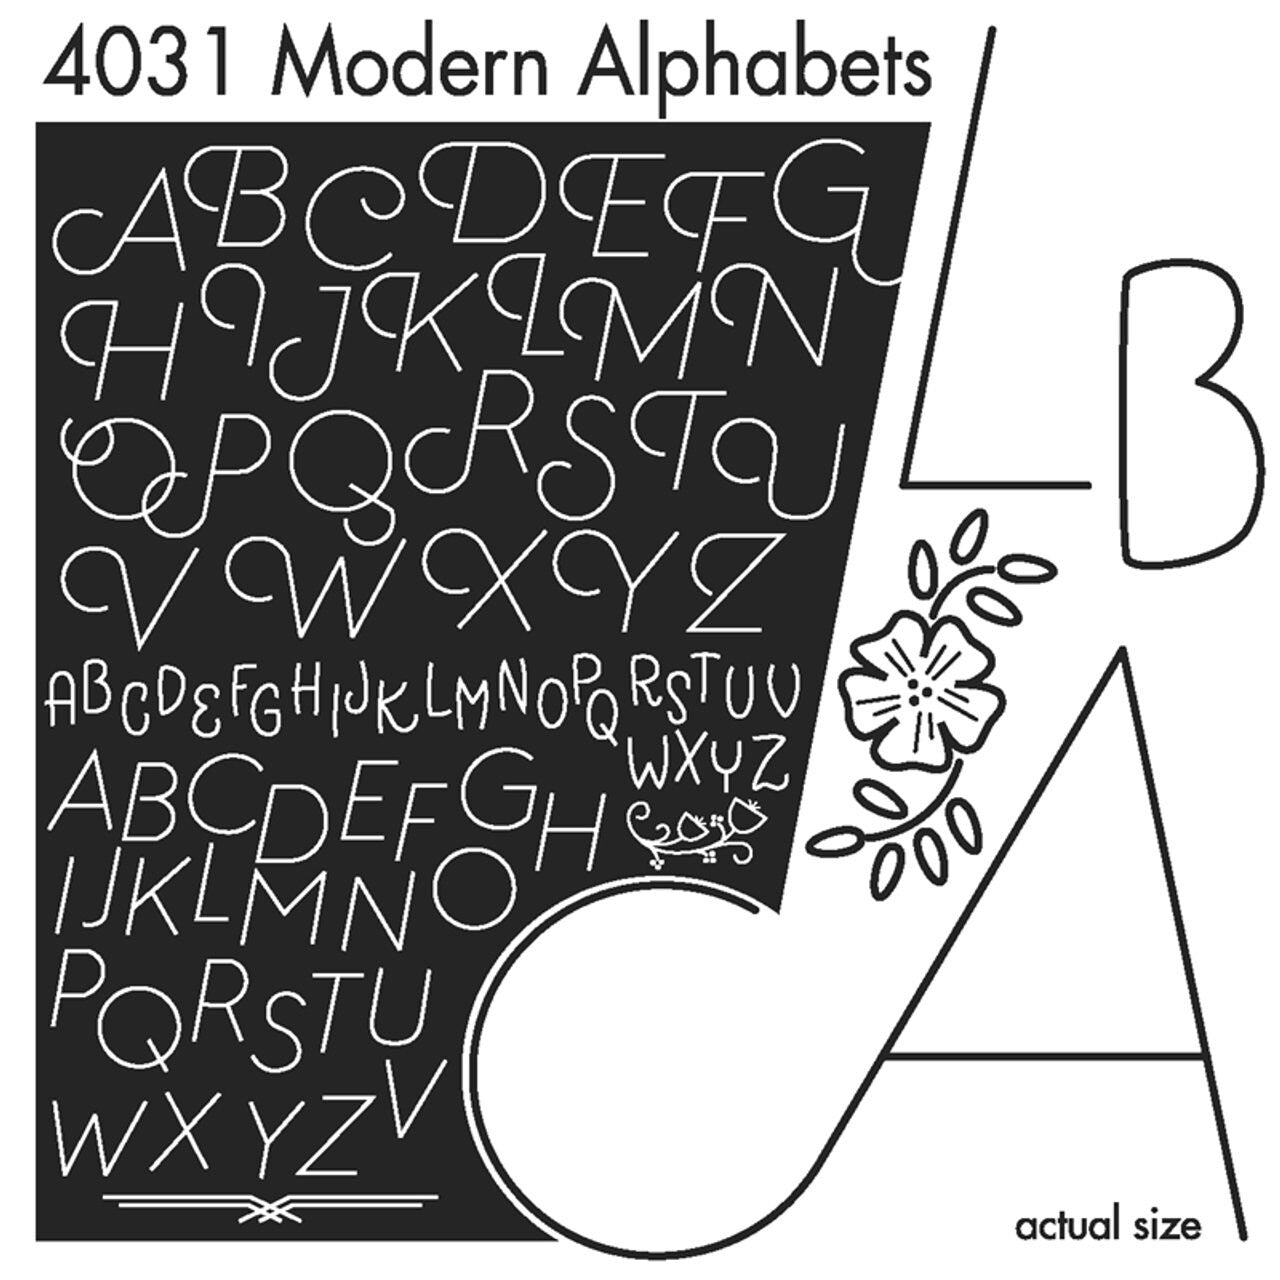 Modern Alphabet Aunt Martha's #4031 Vintage Embroidery Hot Iron Transfer Pattern